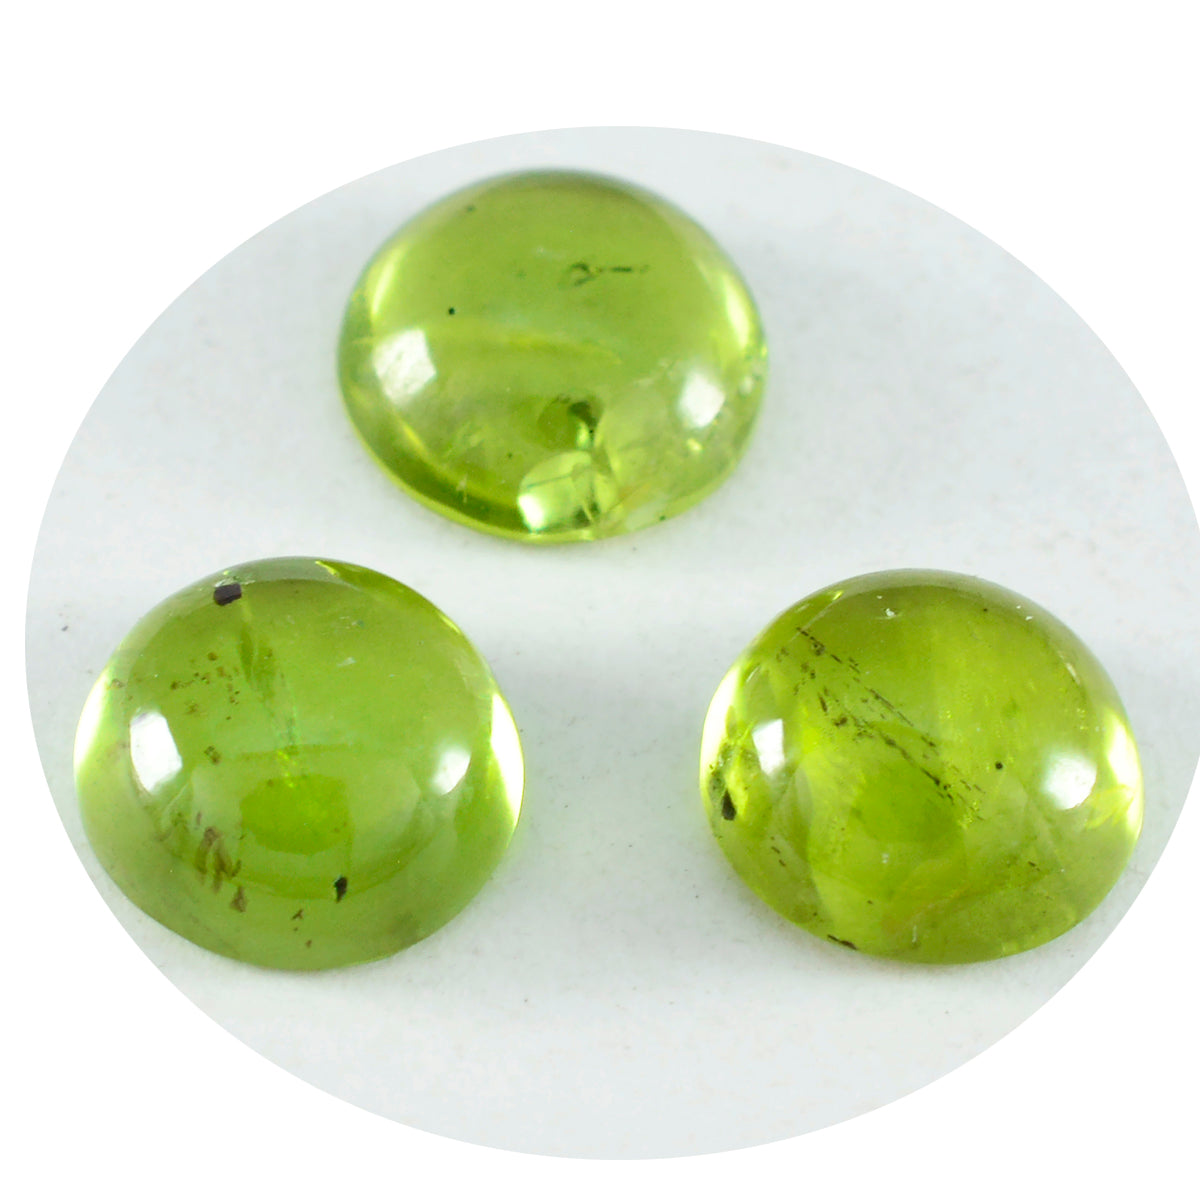 Riyogems 1PC Green Peridot Cabochon 11x11 mm Round Shape attractive Quality Stone